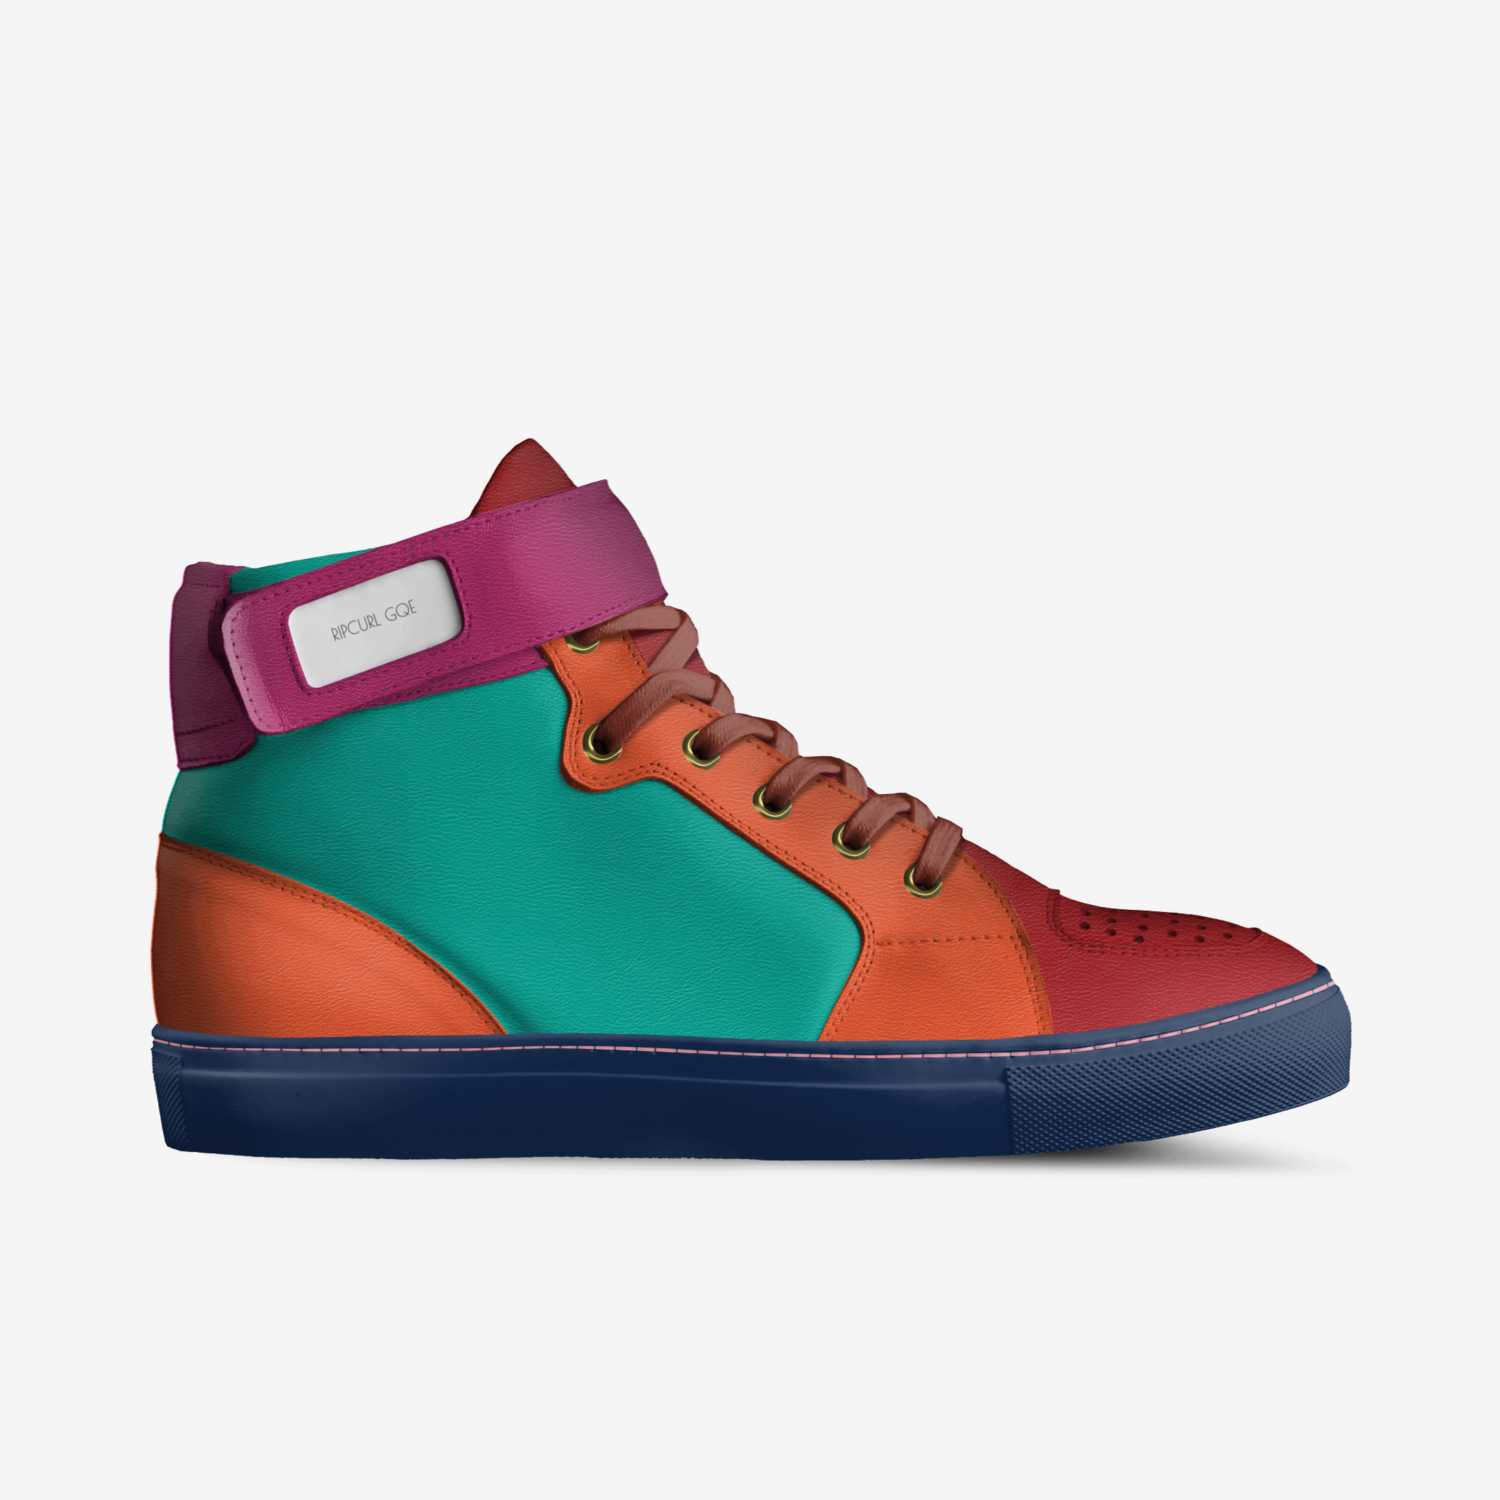 ripcurl GQE | A Custom Shoe concept Gunnar Tomm